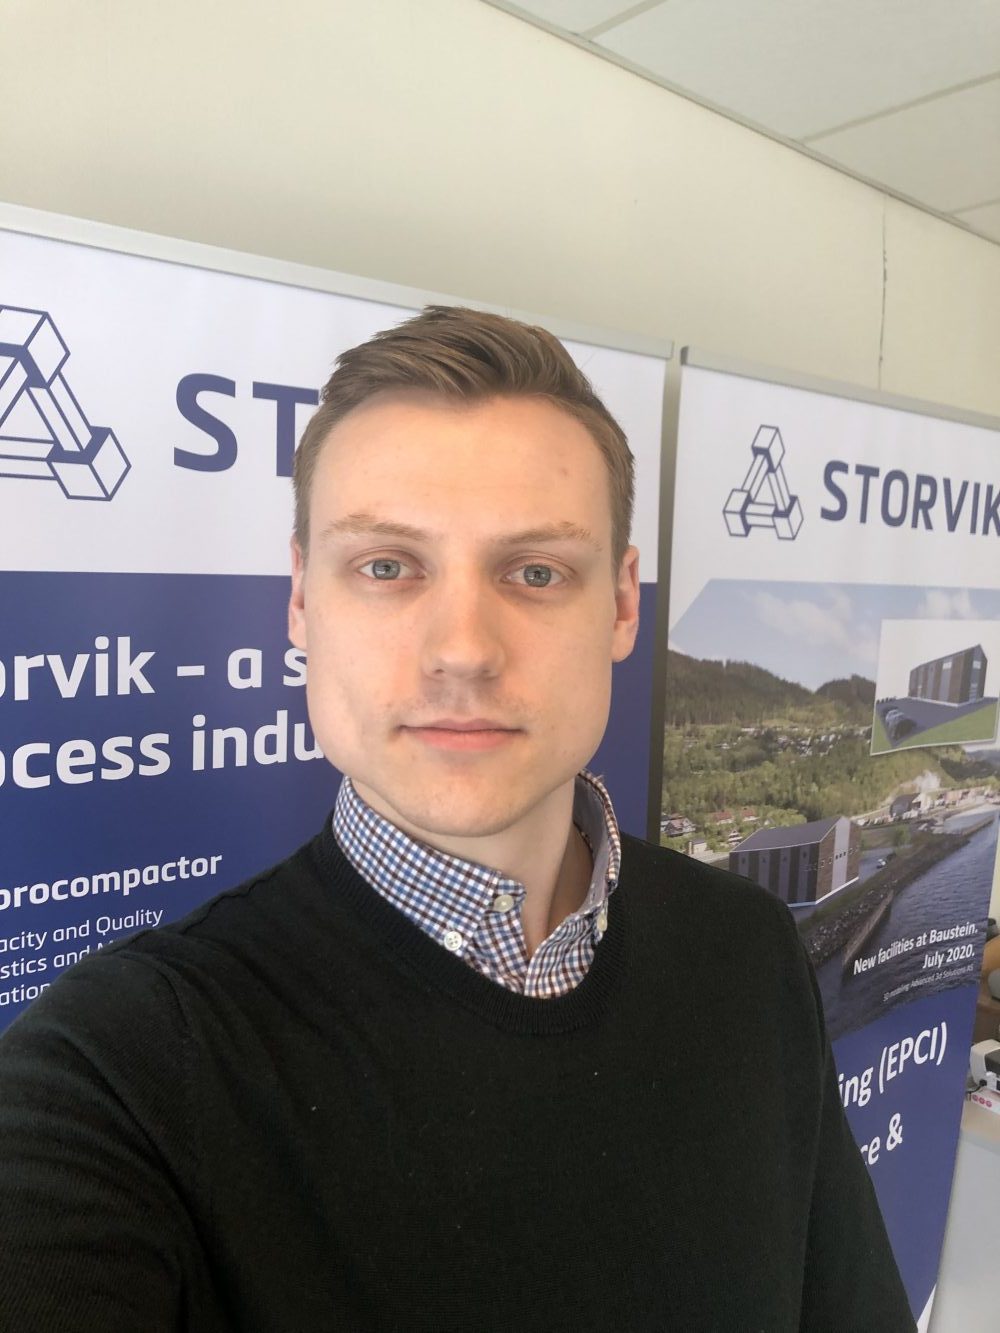 Bjarte Valåmo – new Manager for Storvik in Mosjøen